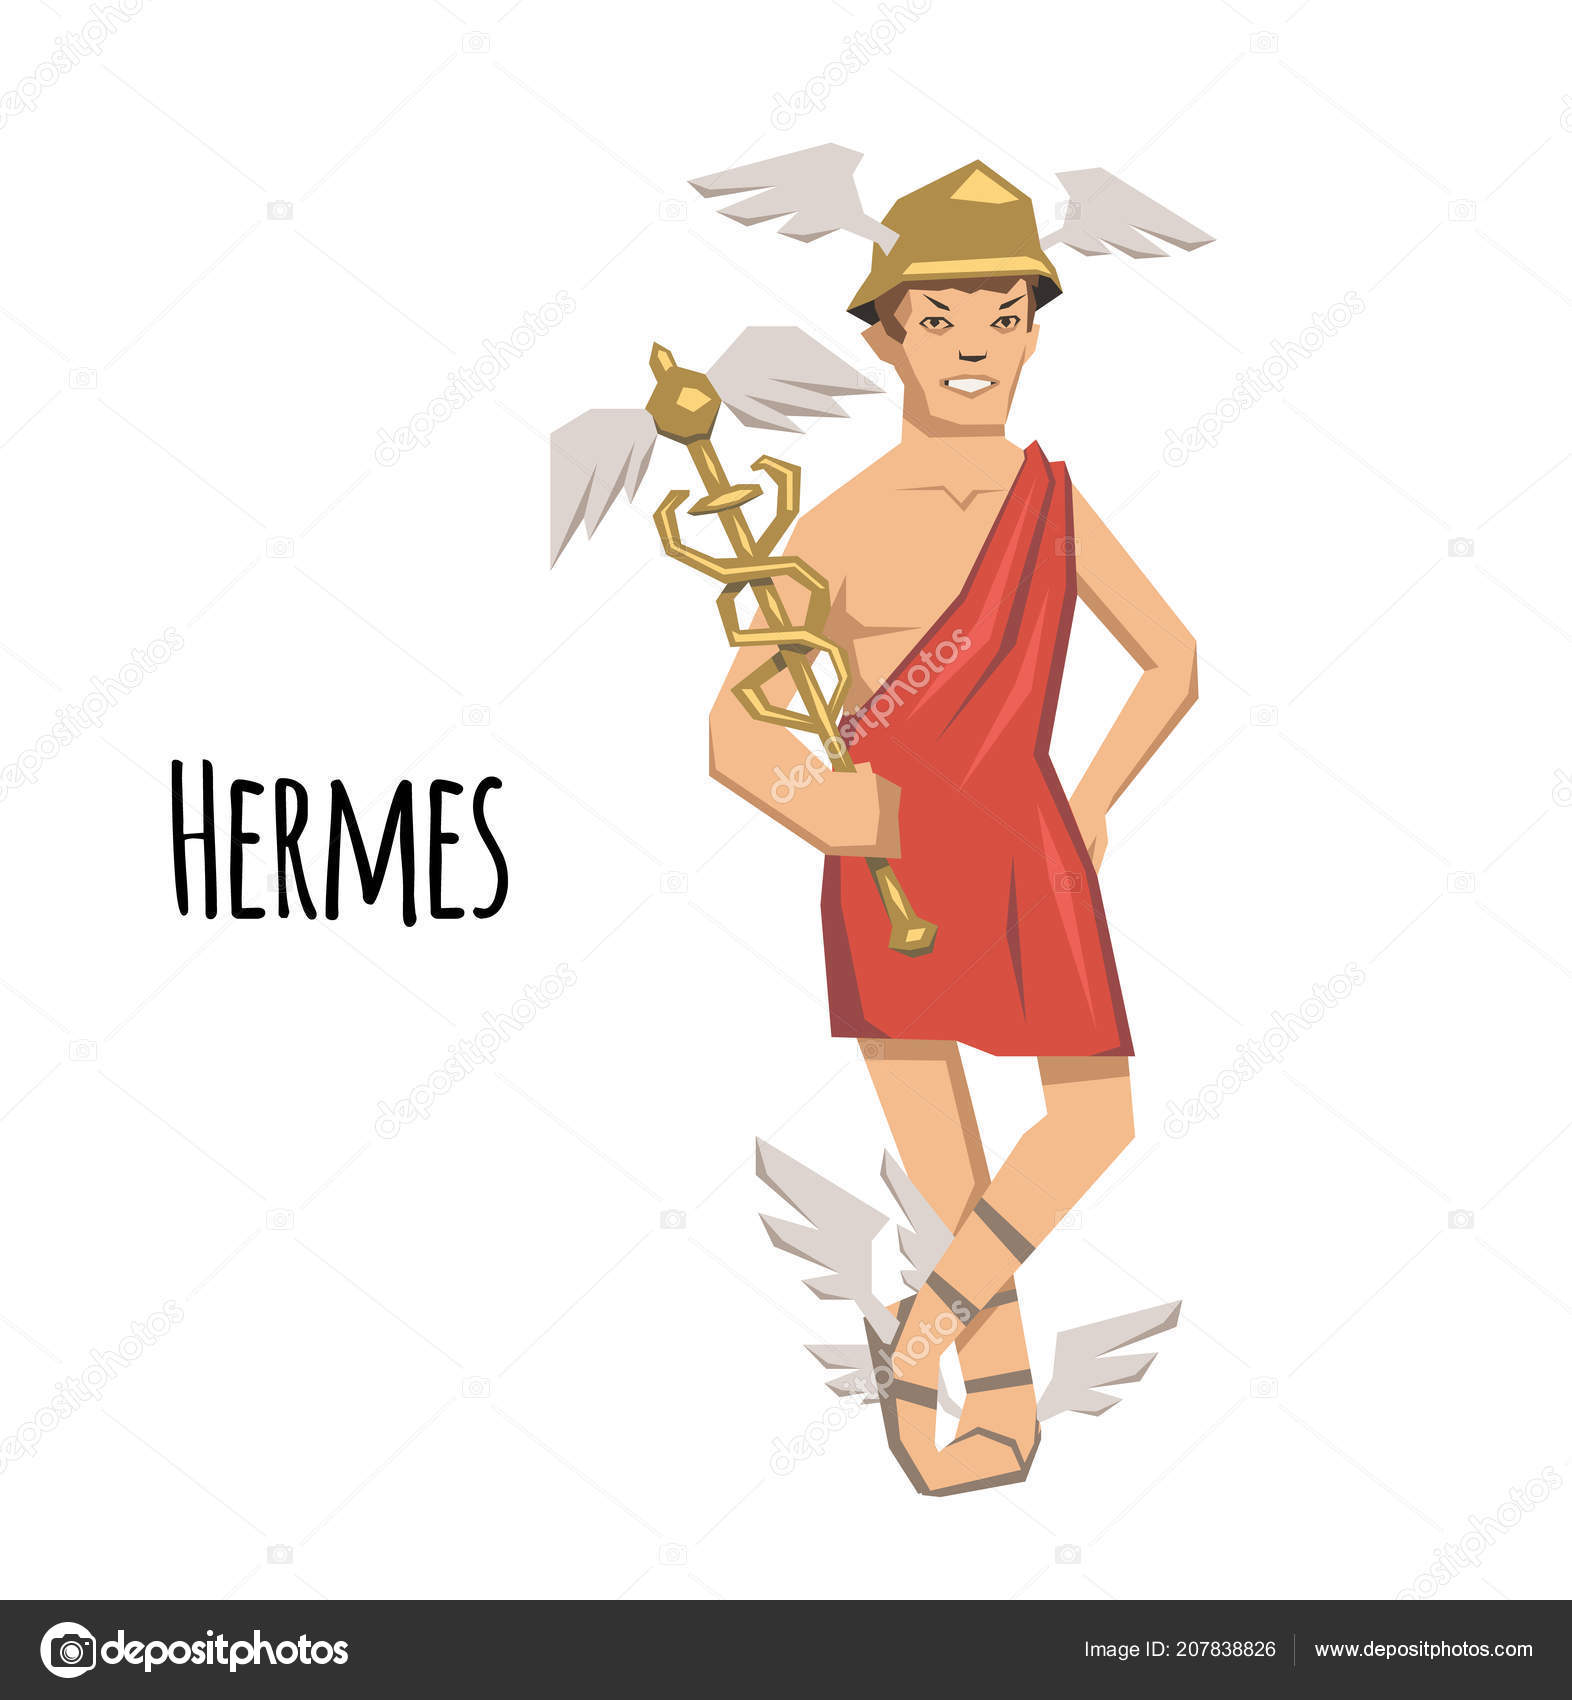 Hermes Ancient Greek God Of Roadways Travelers Merchants And Thieves Messenger Of The Gods Mythology Flat Vector Illustration Isolated On White Background Stock Vector C Goodstocker Yandex Ru 786